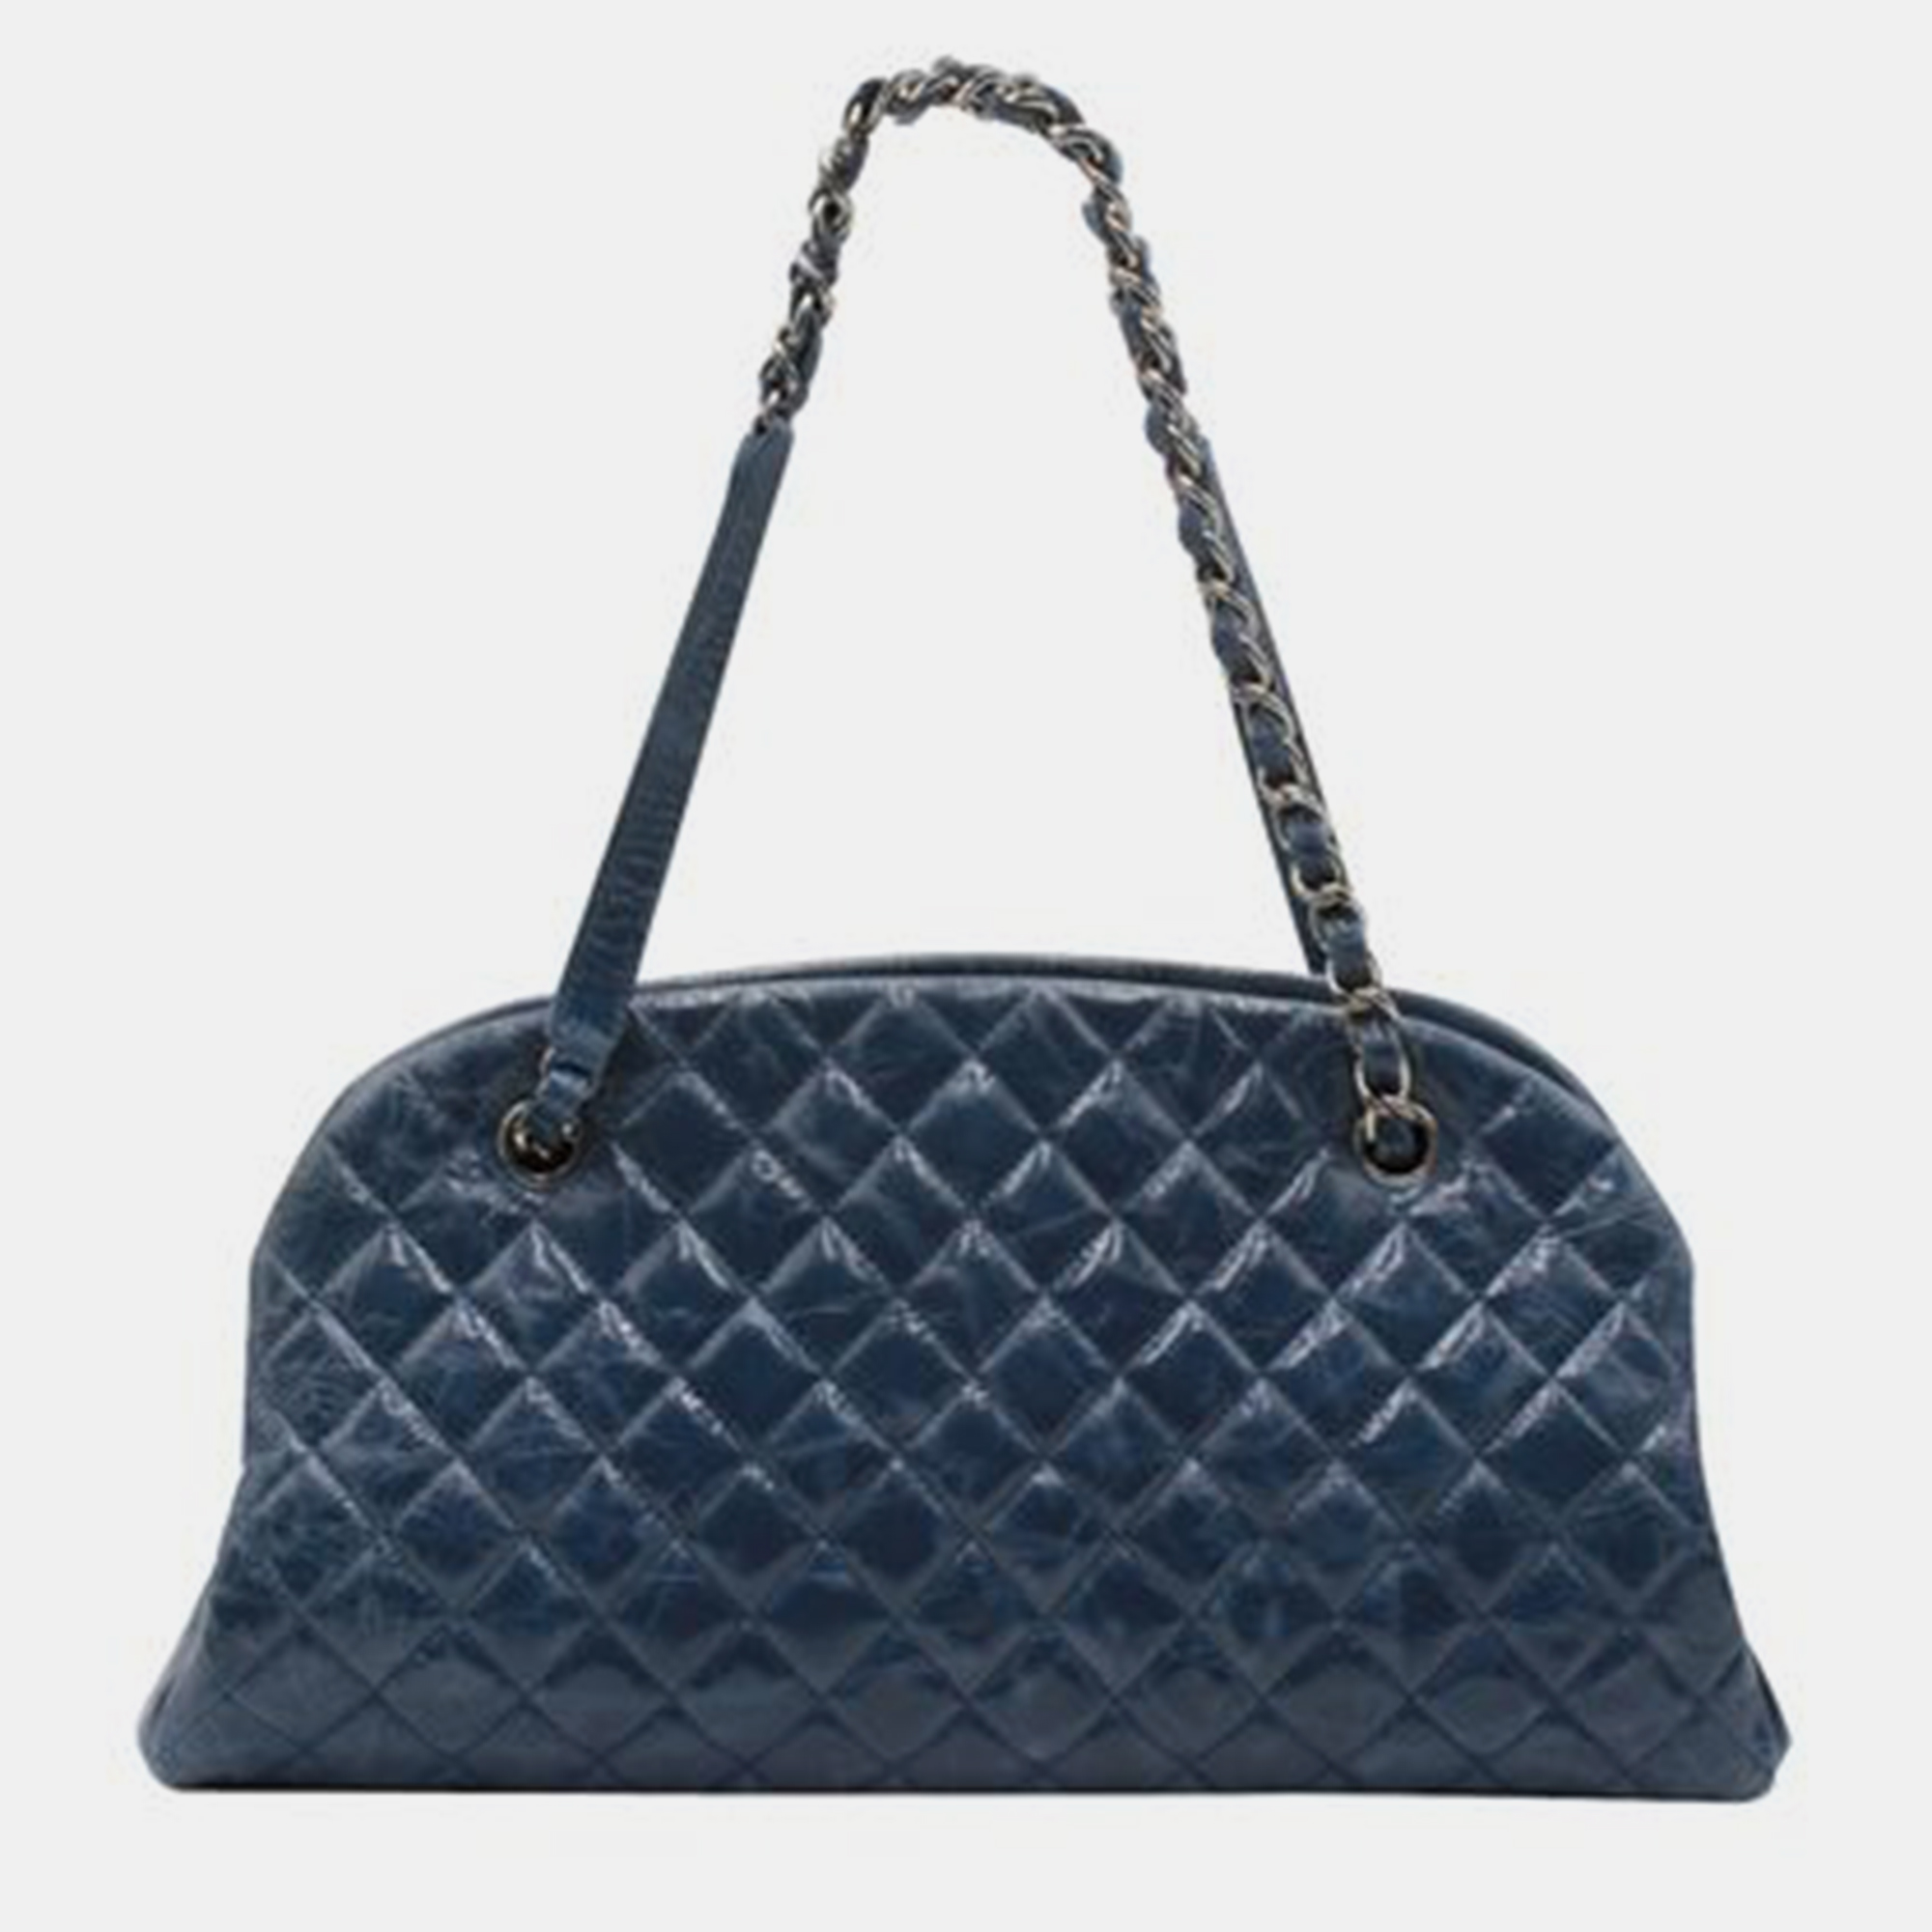 CHANEL Dark Blue Quilted Mademoiselle Leather Bag 2011 SHOULDER BAGS